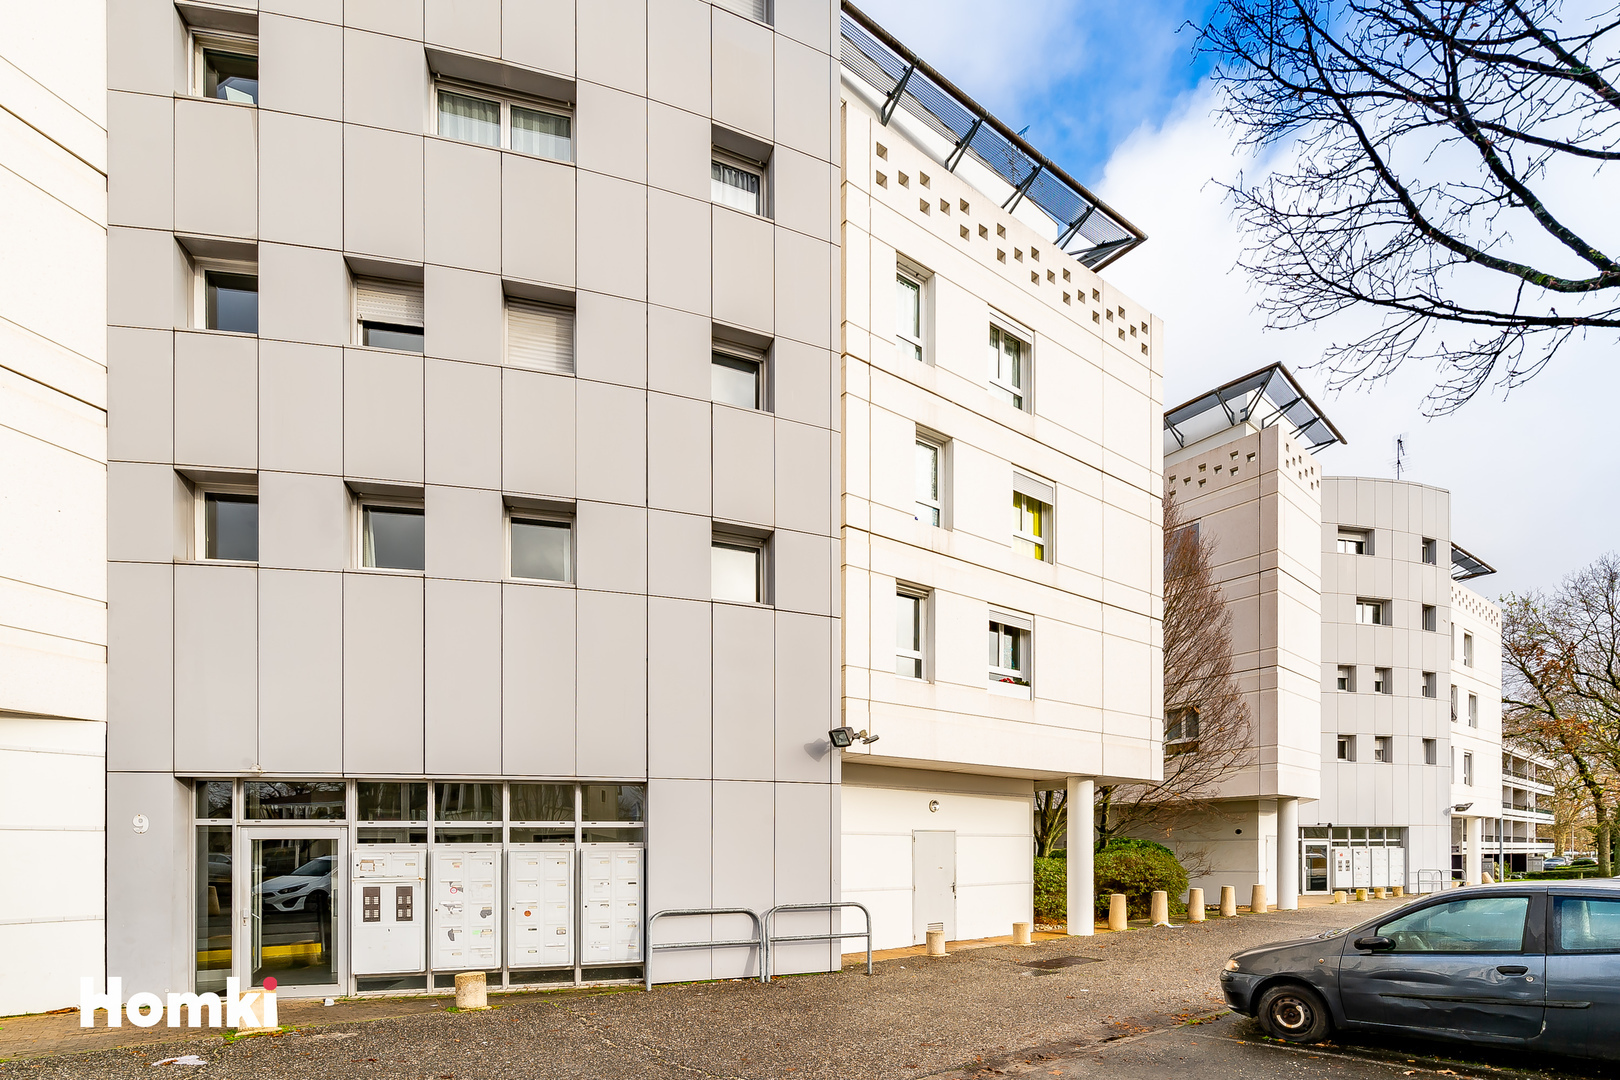 Homki - Vente Appartement  de 58.0 m² à Pessac 33600